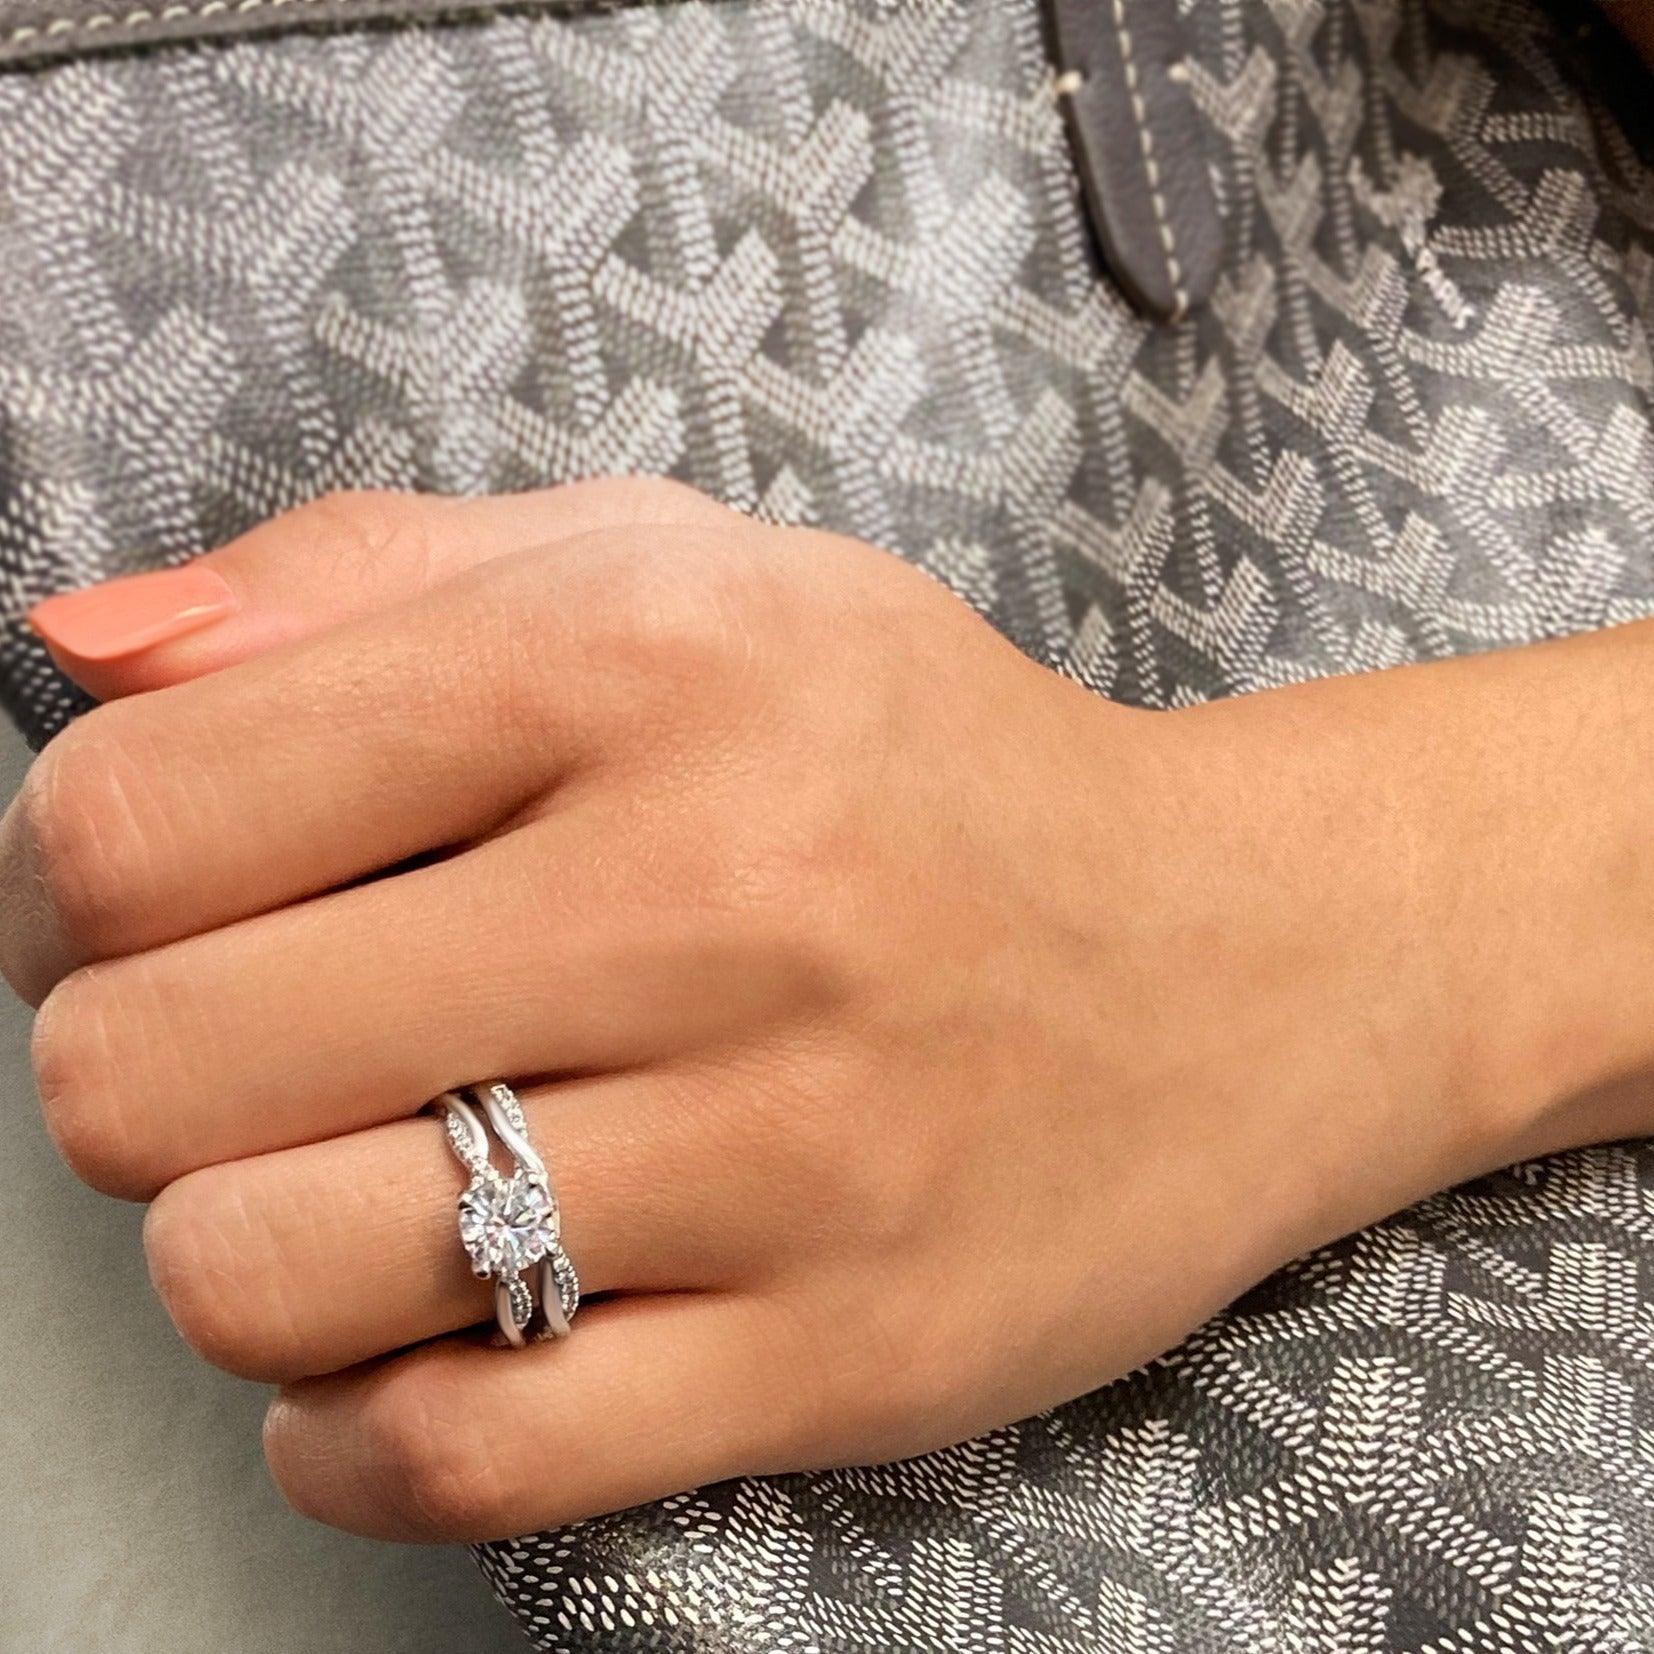 BW JAMES Engagement Rings "The Dalton" Classic Twist Infinity Semi-Mount Diamond Ring